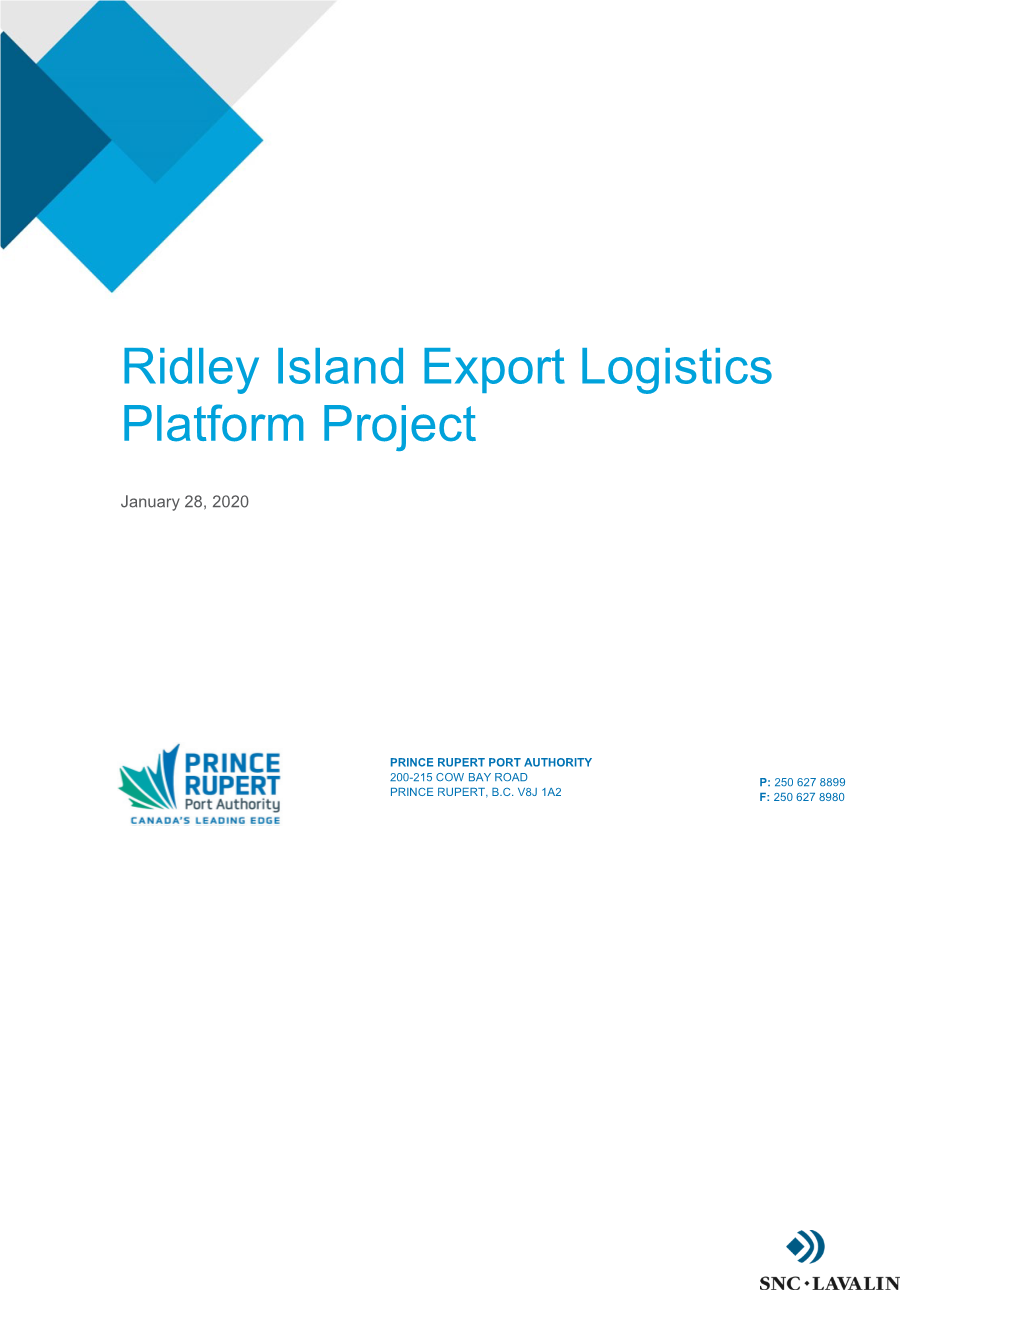 Ridley Island Export Logistics Platform Project